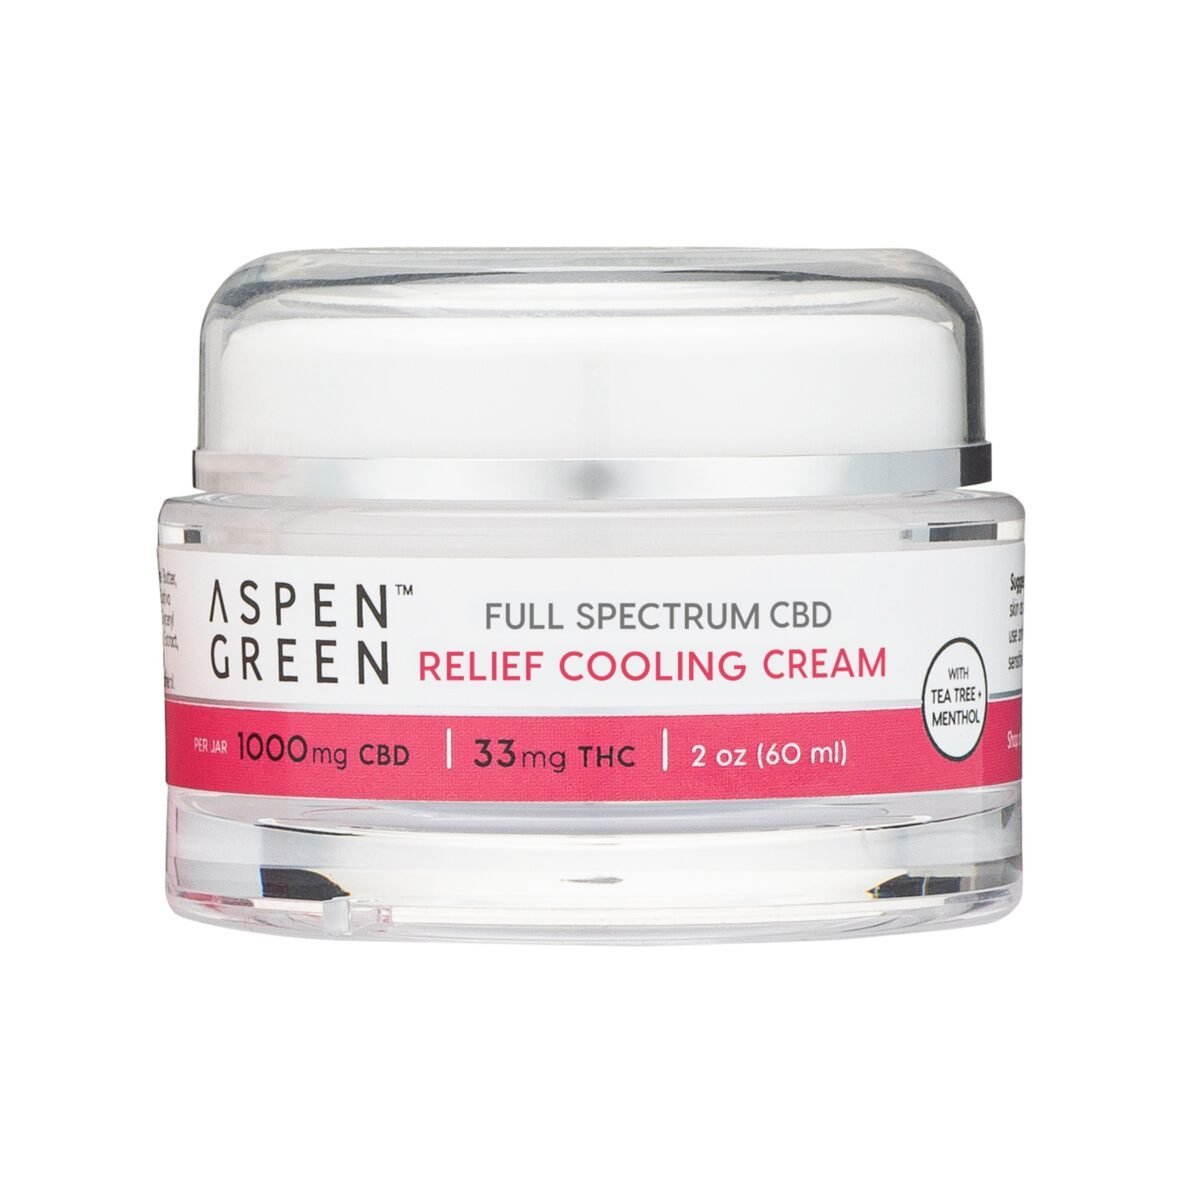 Aspen Green Full Spectrum CBD Relief Cooling Cream Jar (1000mg CBD)